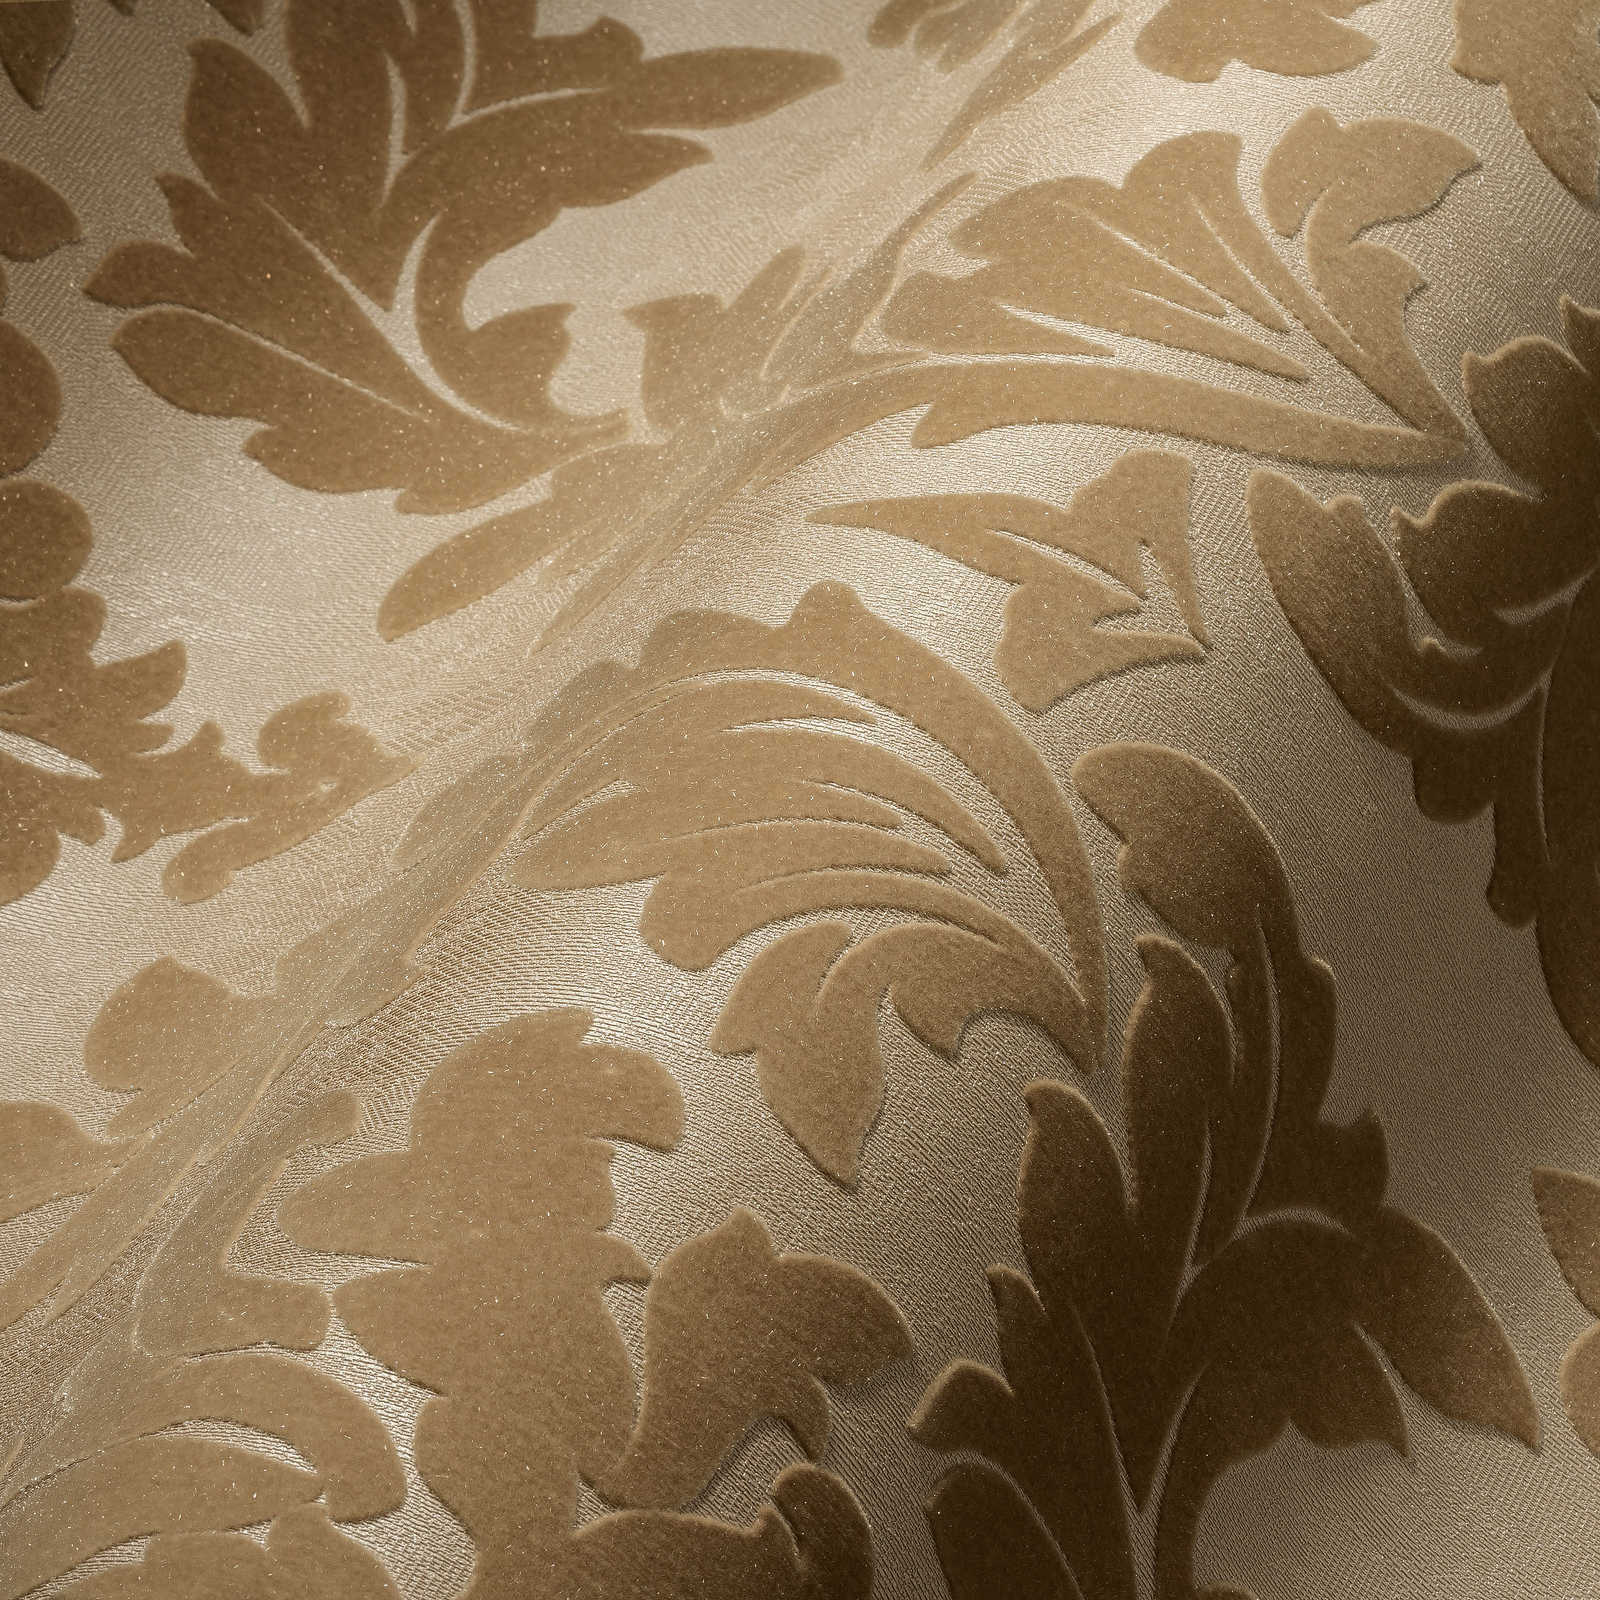             Barok behang oud goud decor & textuur effect - metallic
        